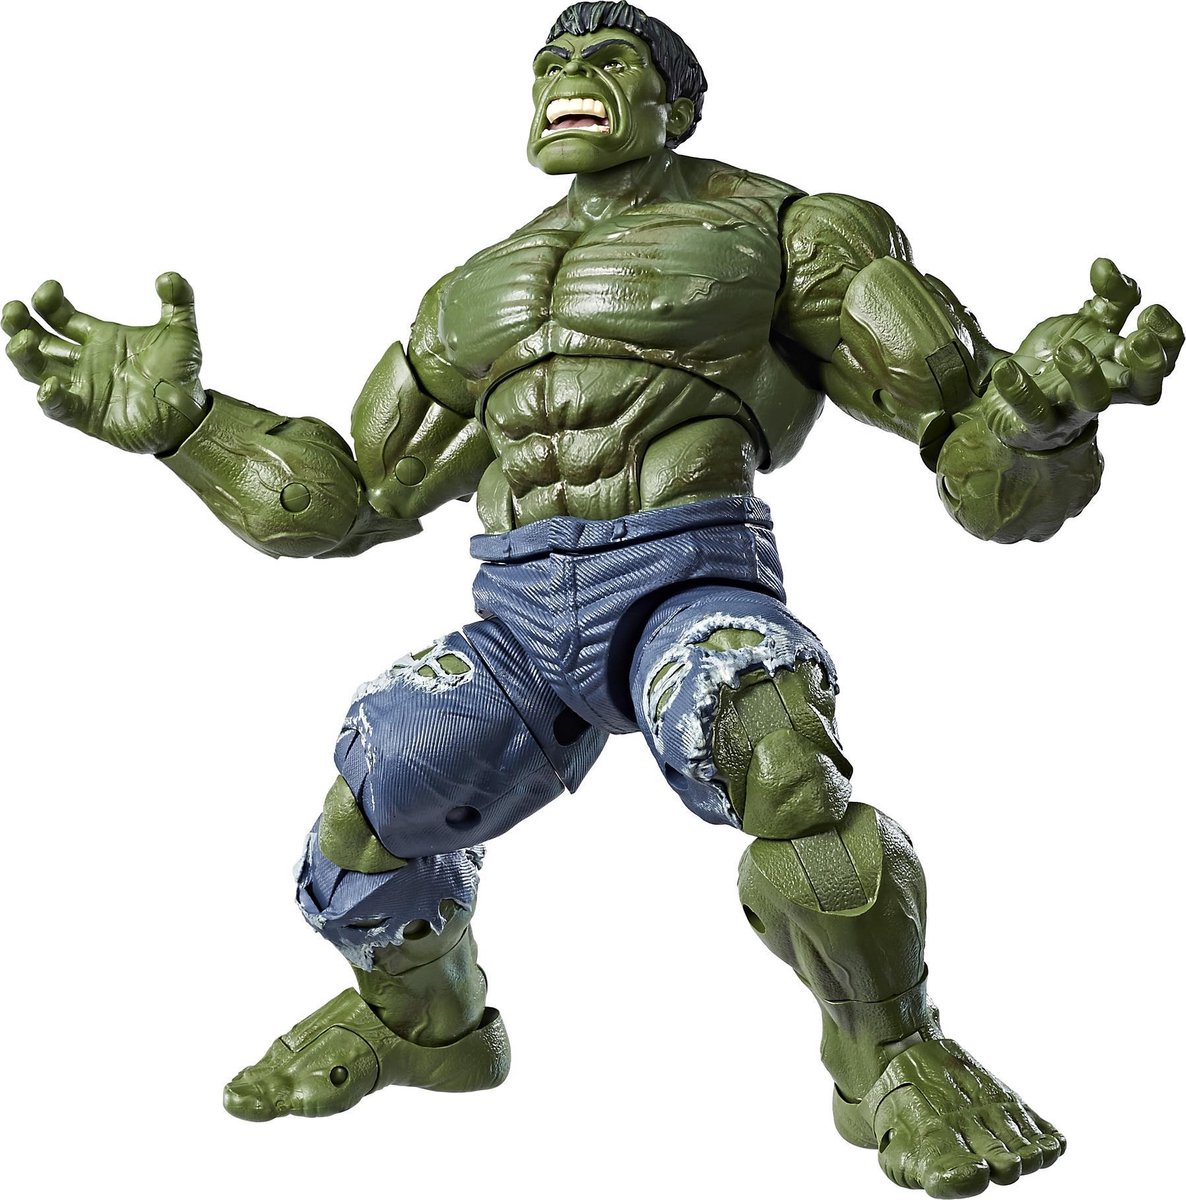 MARVEL Hulk Figur med handske Marvel Legend The Avenger Super